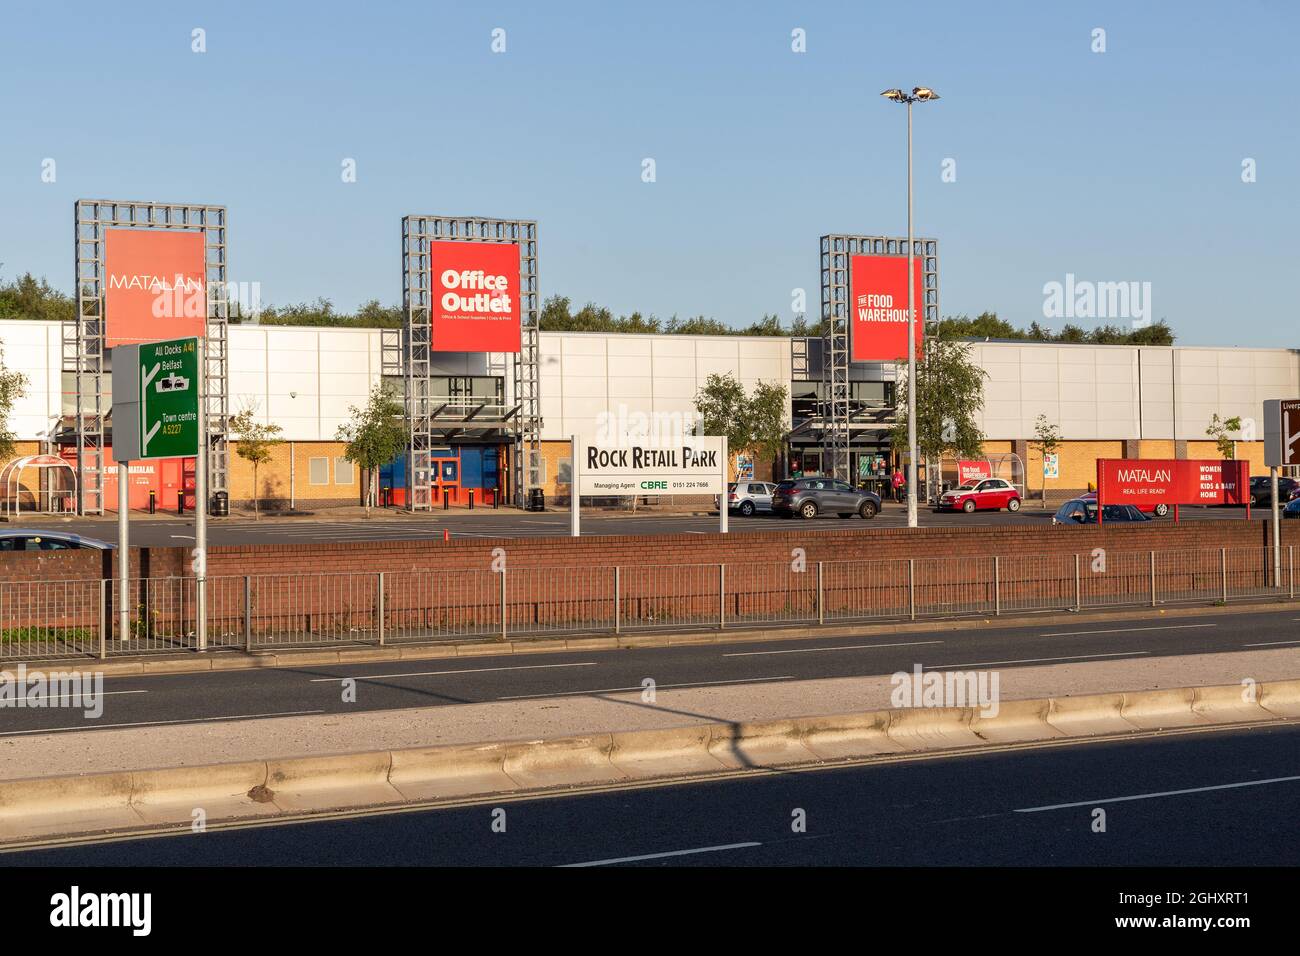 Birkenhead, Regno Unito: Rock Retail Park, New Chester Road. Centro commerciale per Matalan, Office Outlet, Food Warehouse, McDonalds, B&M. Foto Stock